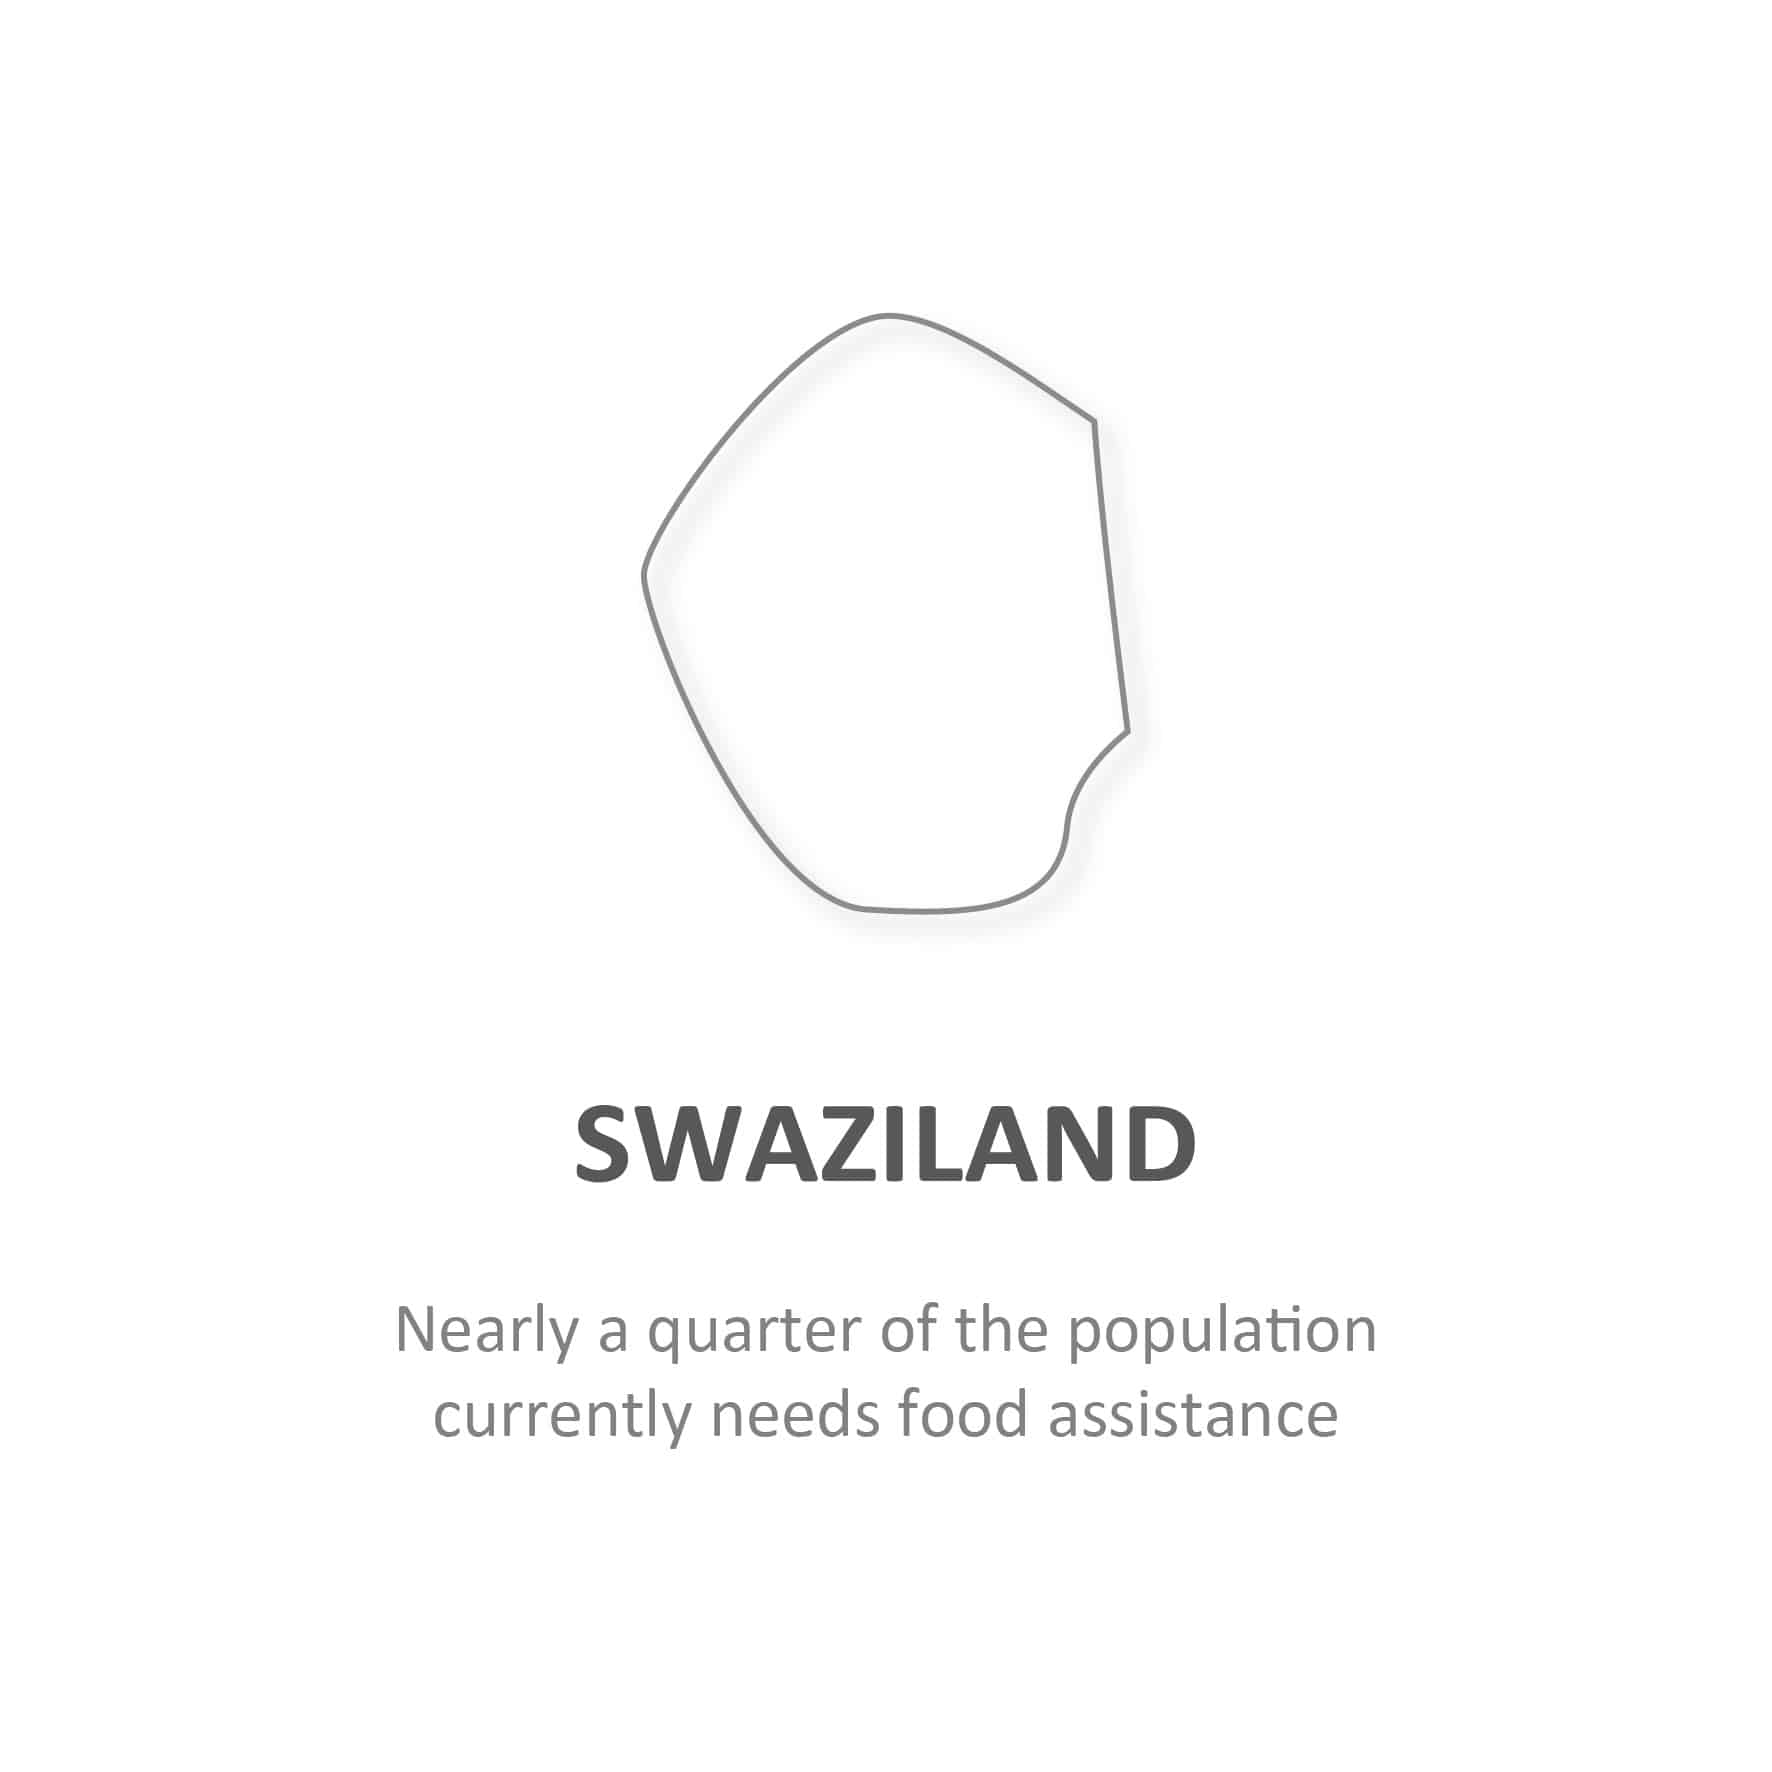 Statistics for Swaziland